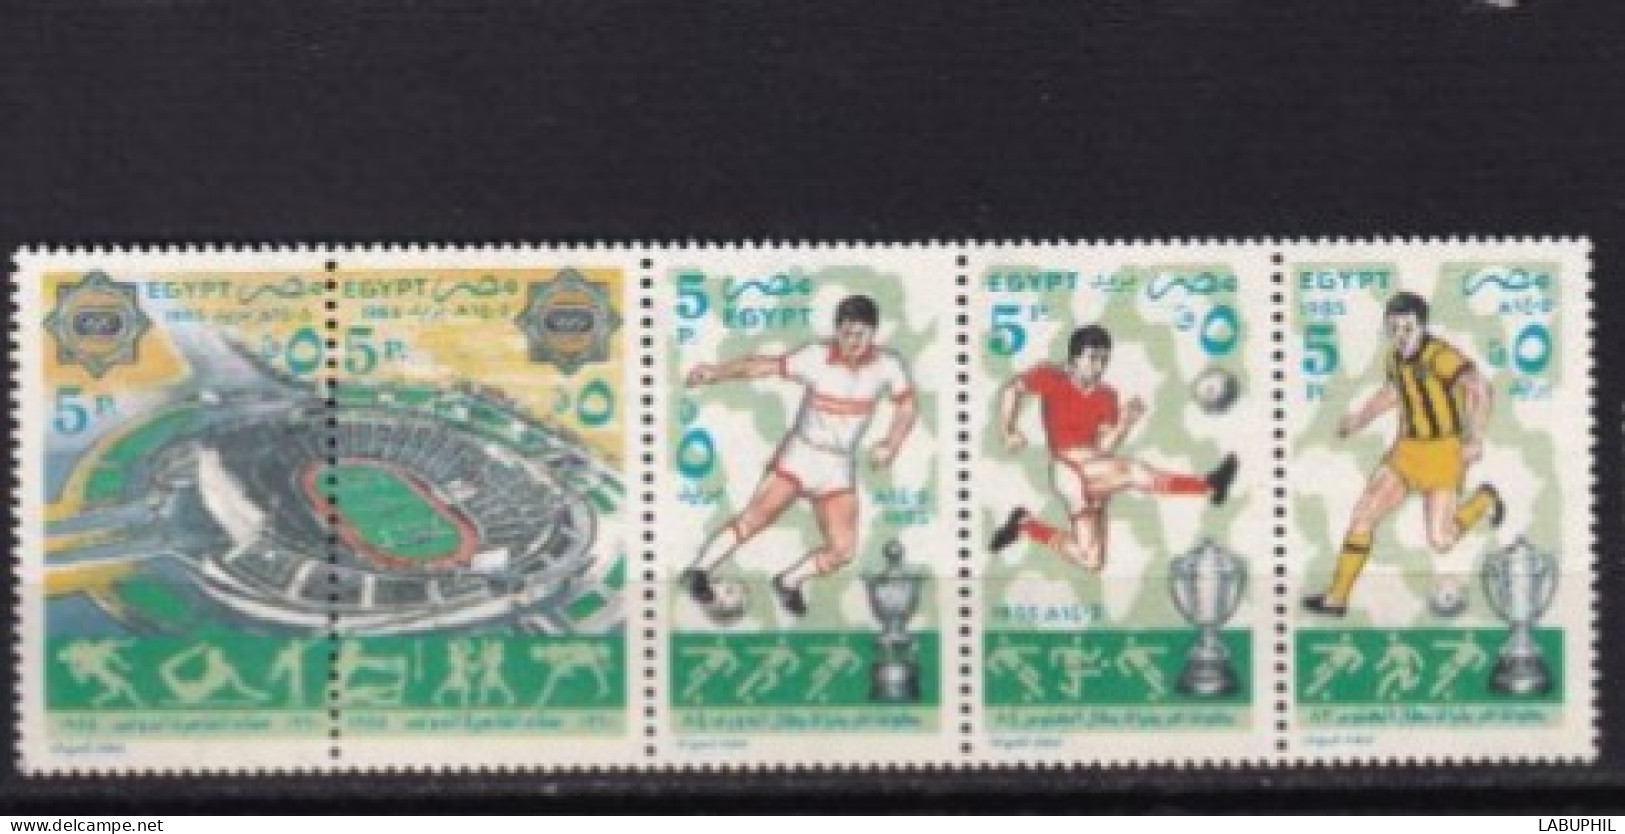 EGYPTE MNH ** 1985 Sport Foot - Nuovi